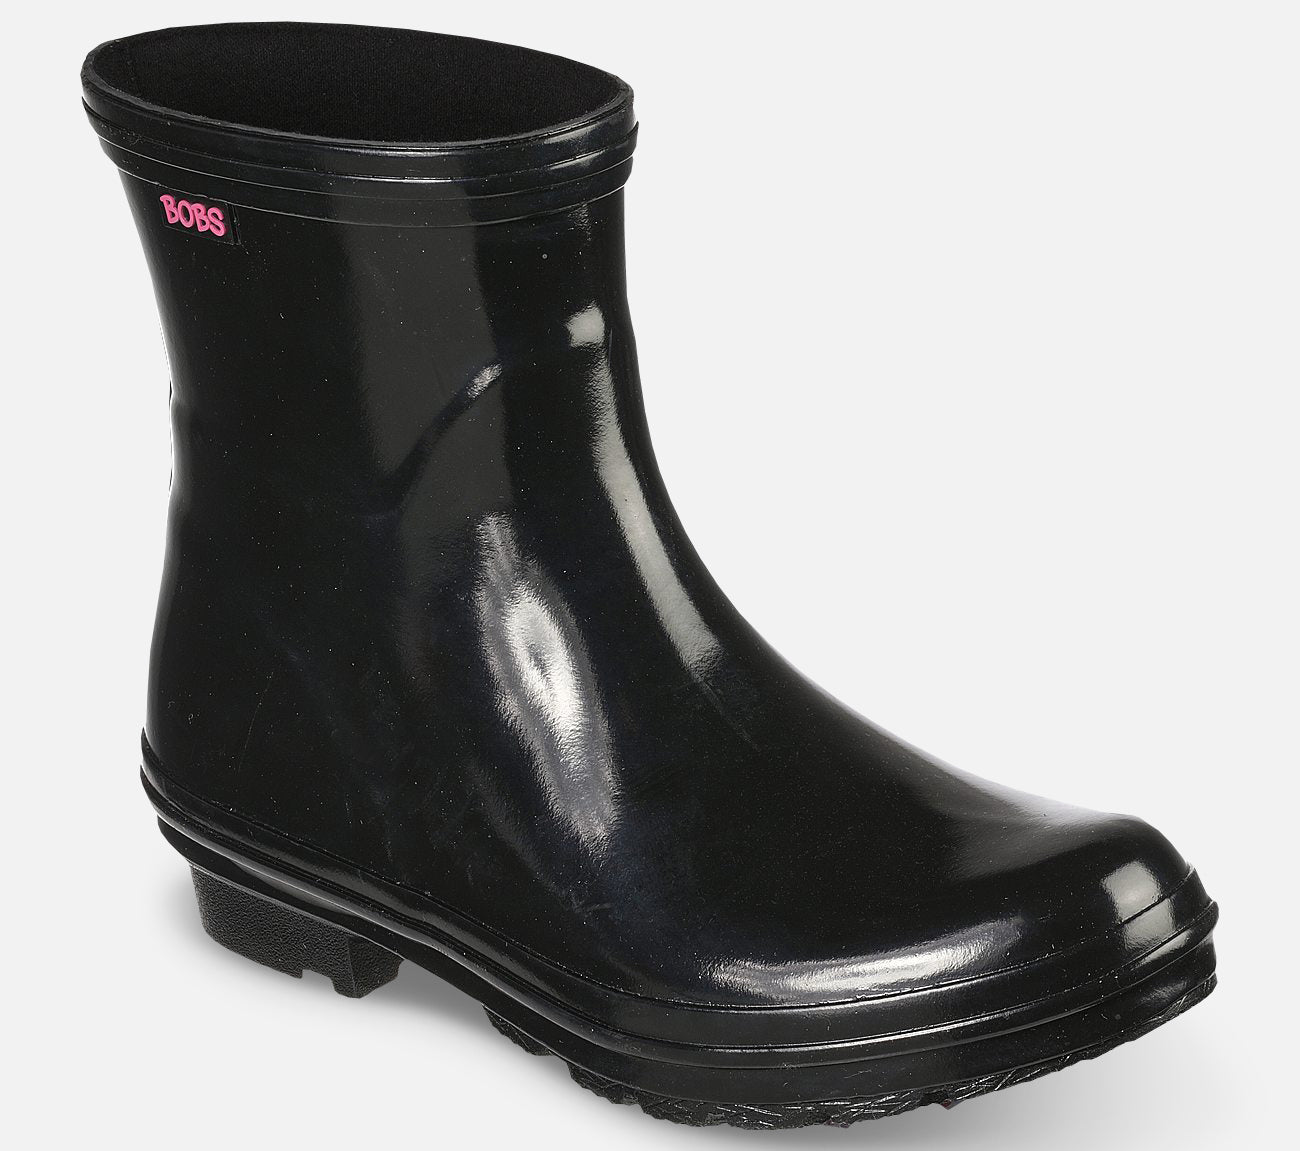 BOBS Rain Check - Neon Puddles - Waterproof Boot Skechers